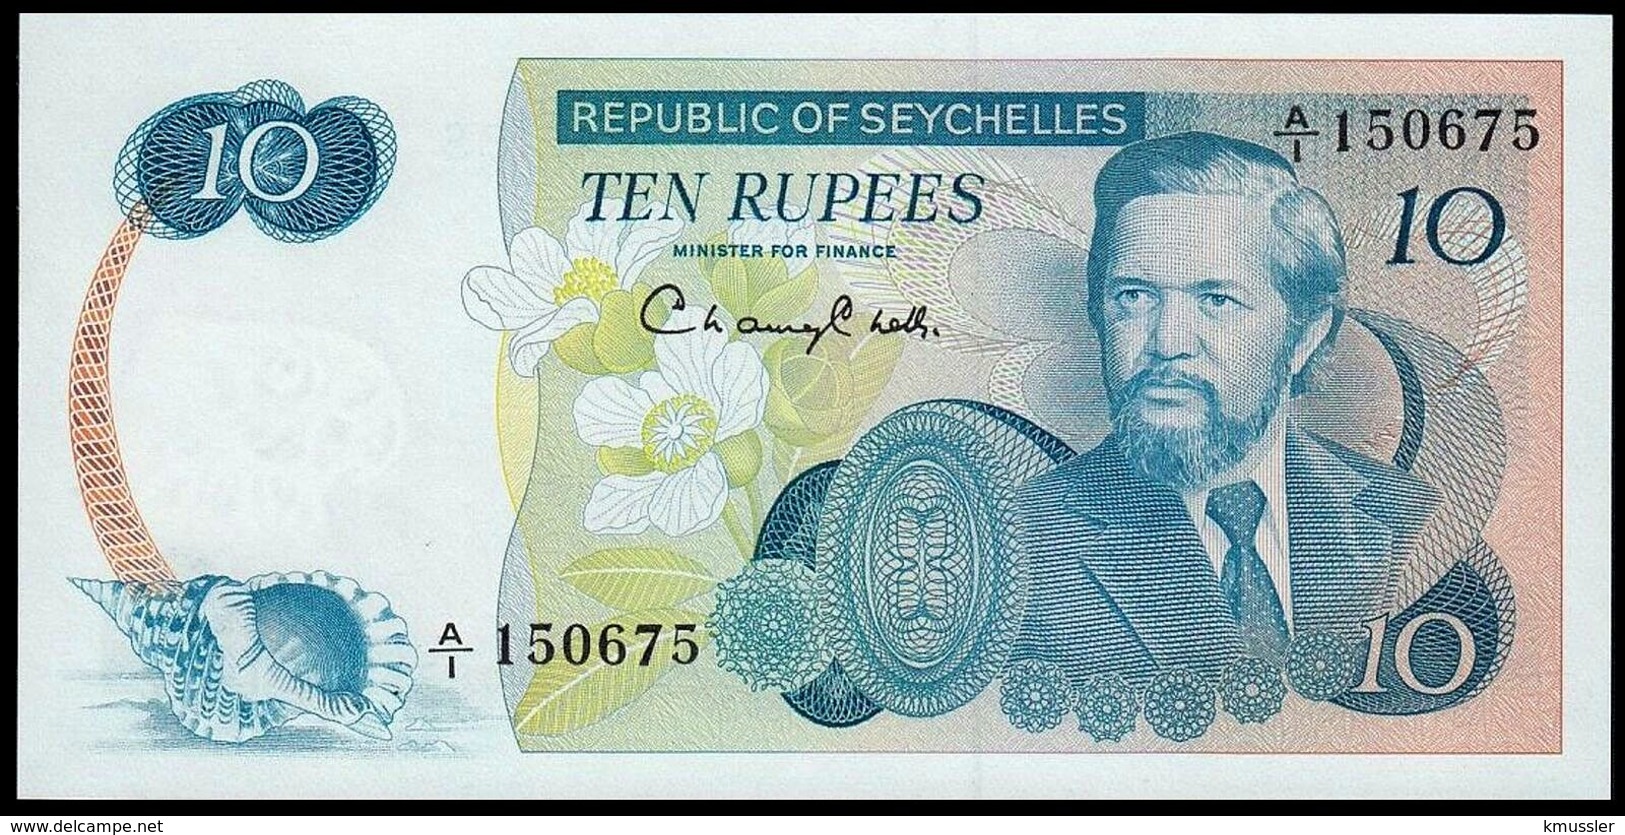 # # # Banknote Seychellen (Seychelles) 10 Rupees UNC # # # - Seychellen